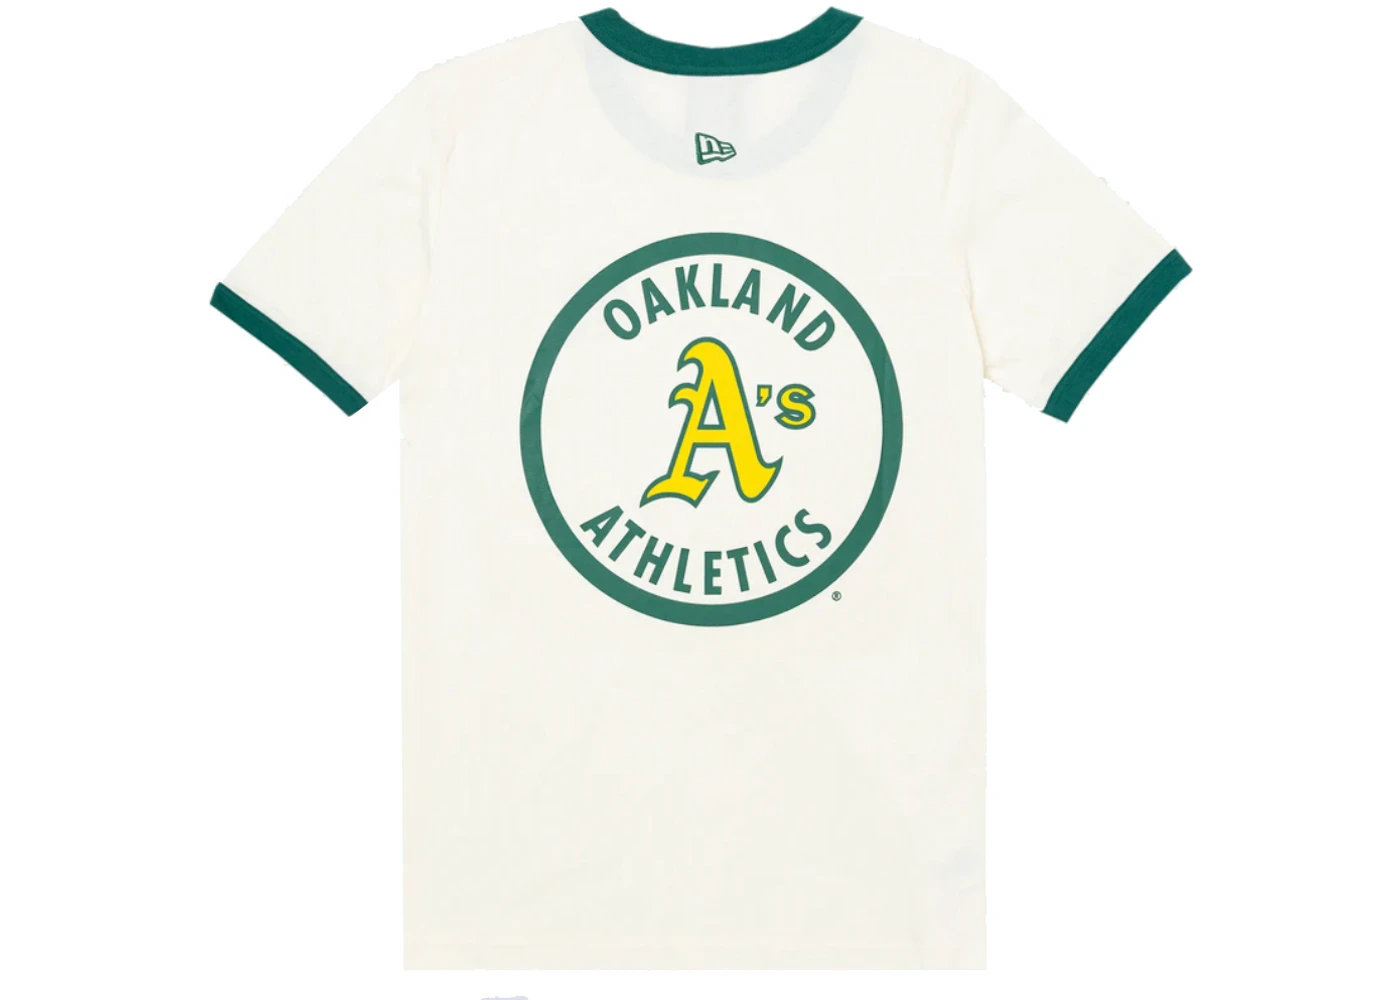 MLB Pikachu Baseball Sports Oakland Athletics T Shirt